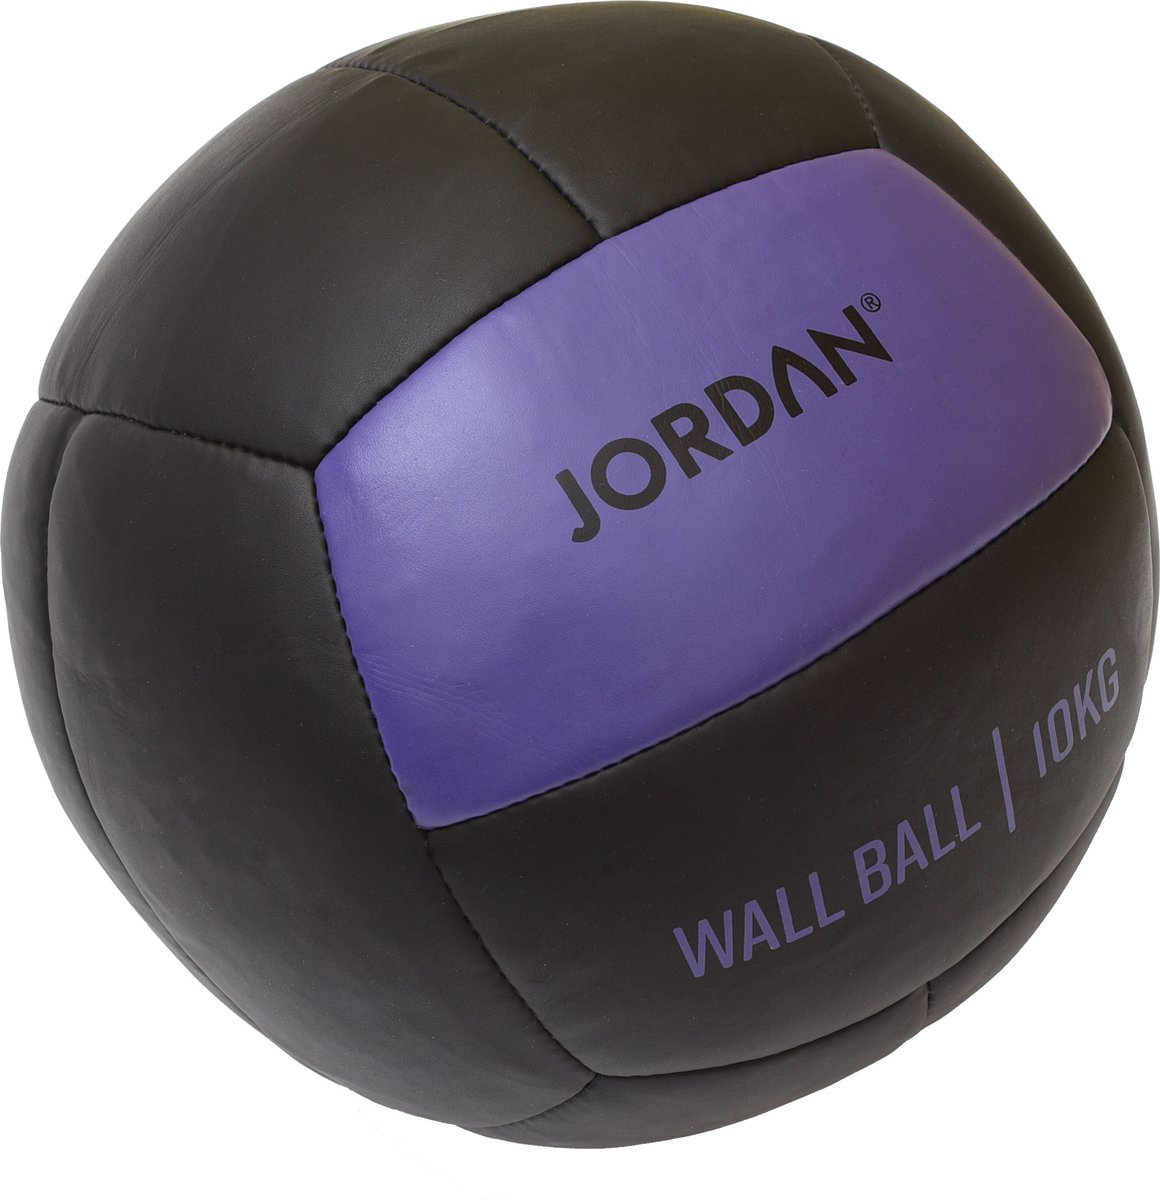 10kg Wallball- Oversize Medicine ball (purple)